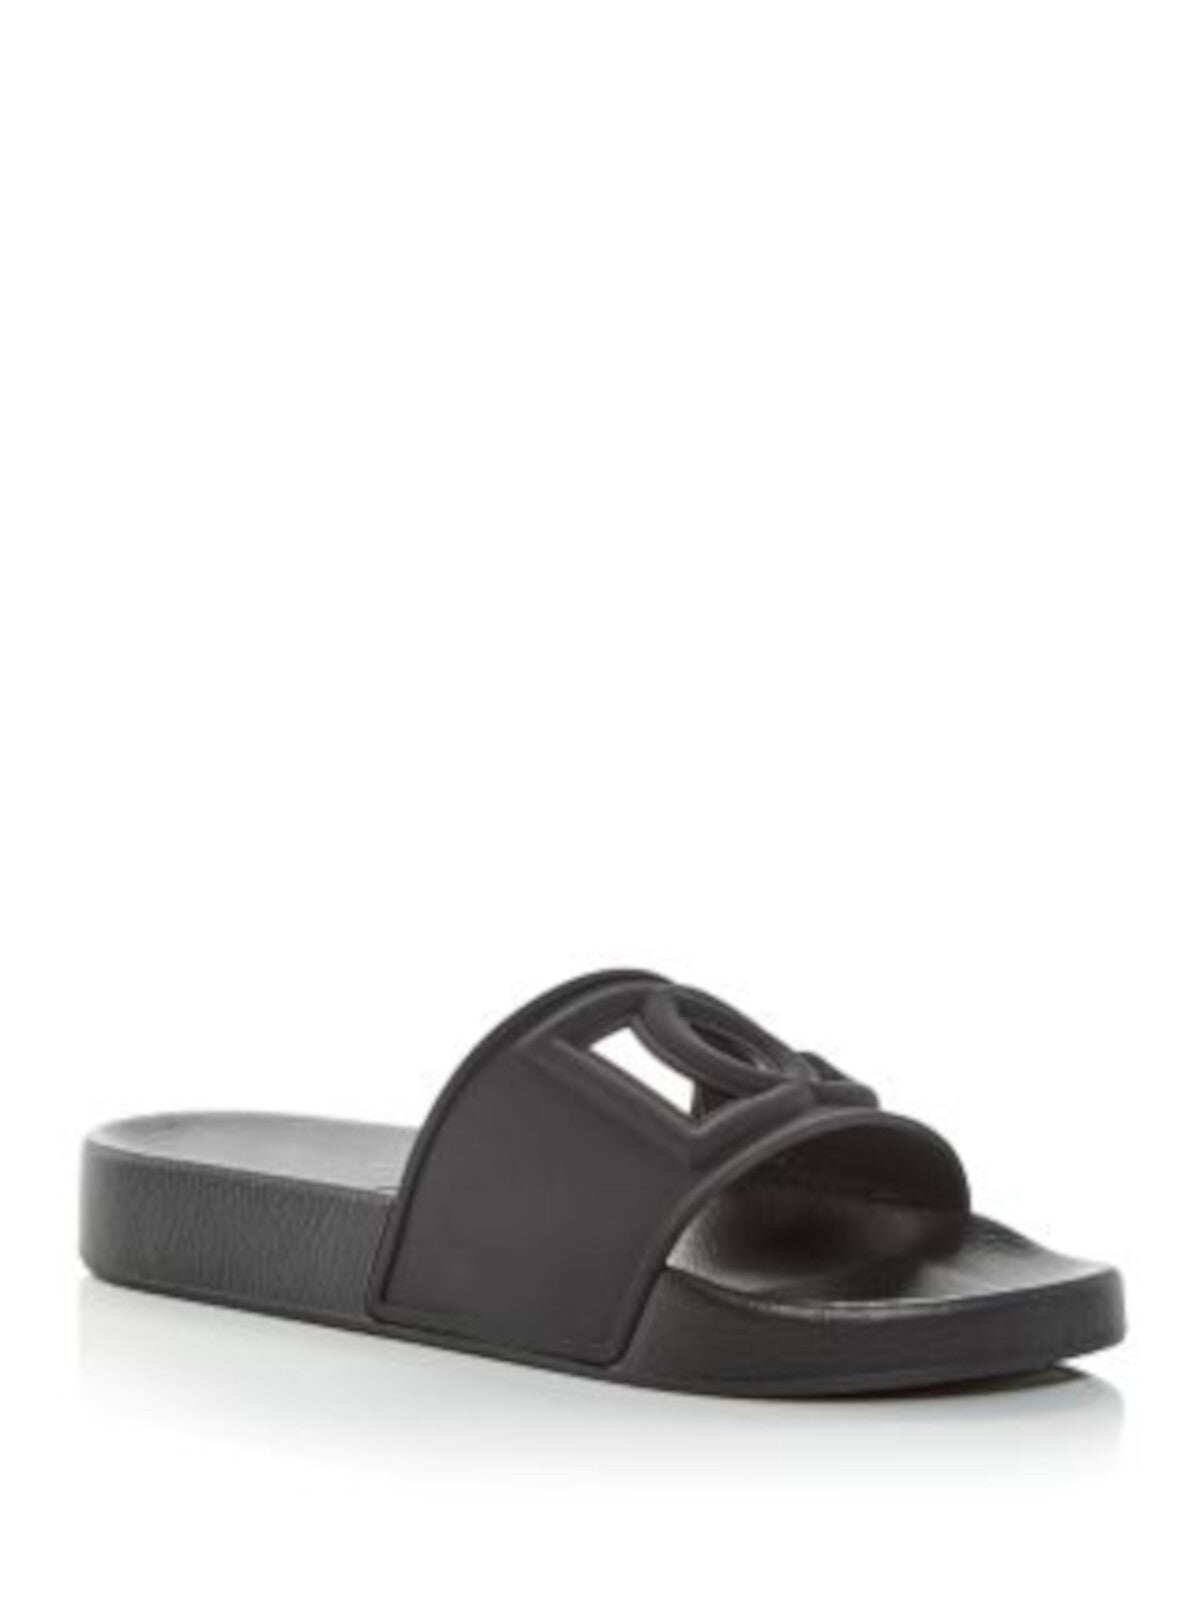 DOLCE & GABBANA Womens Black Cut Out Logo 20223 Round Toe Platform Slip On Slide Sandals Shoes 35